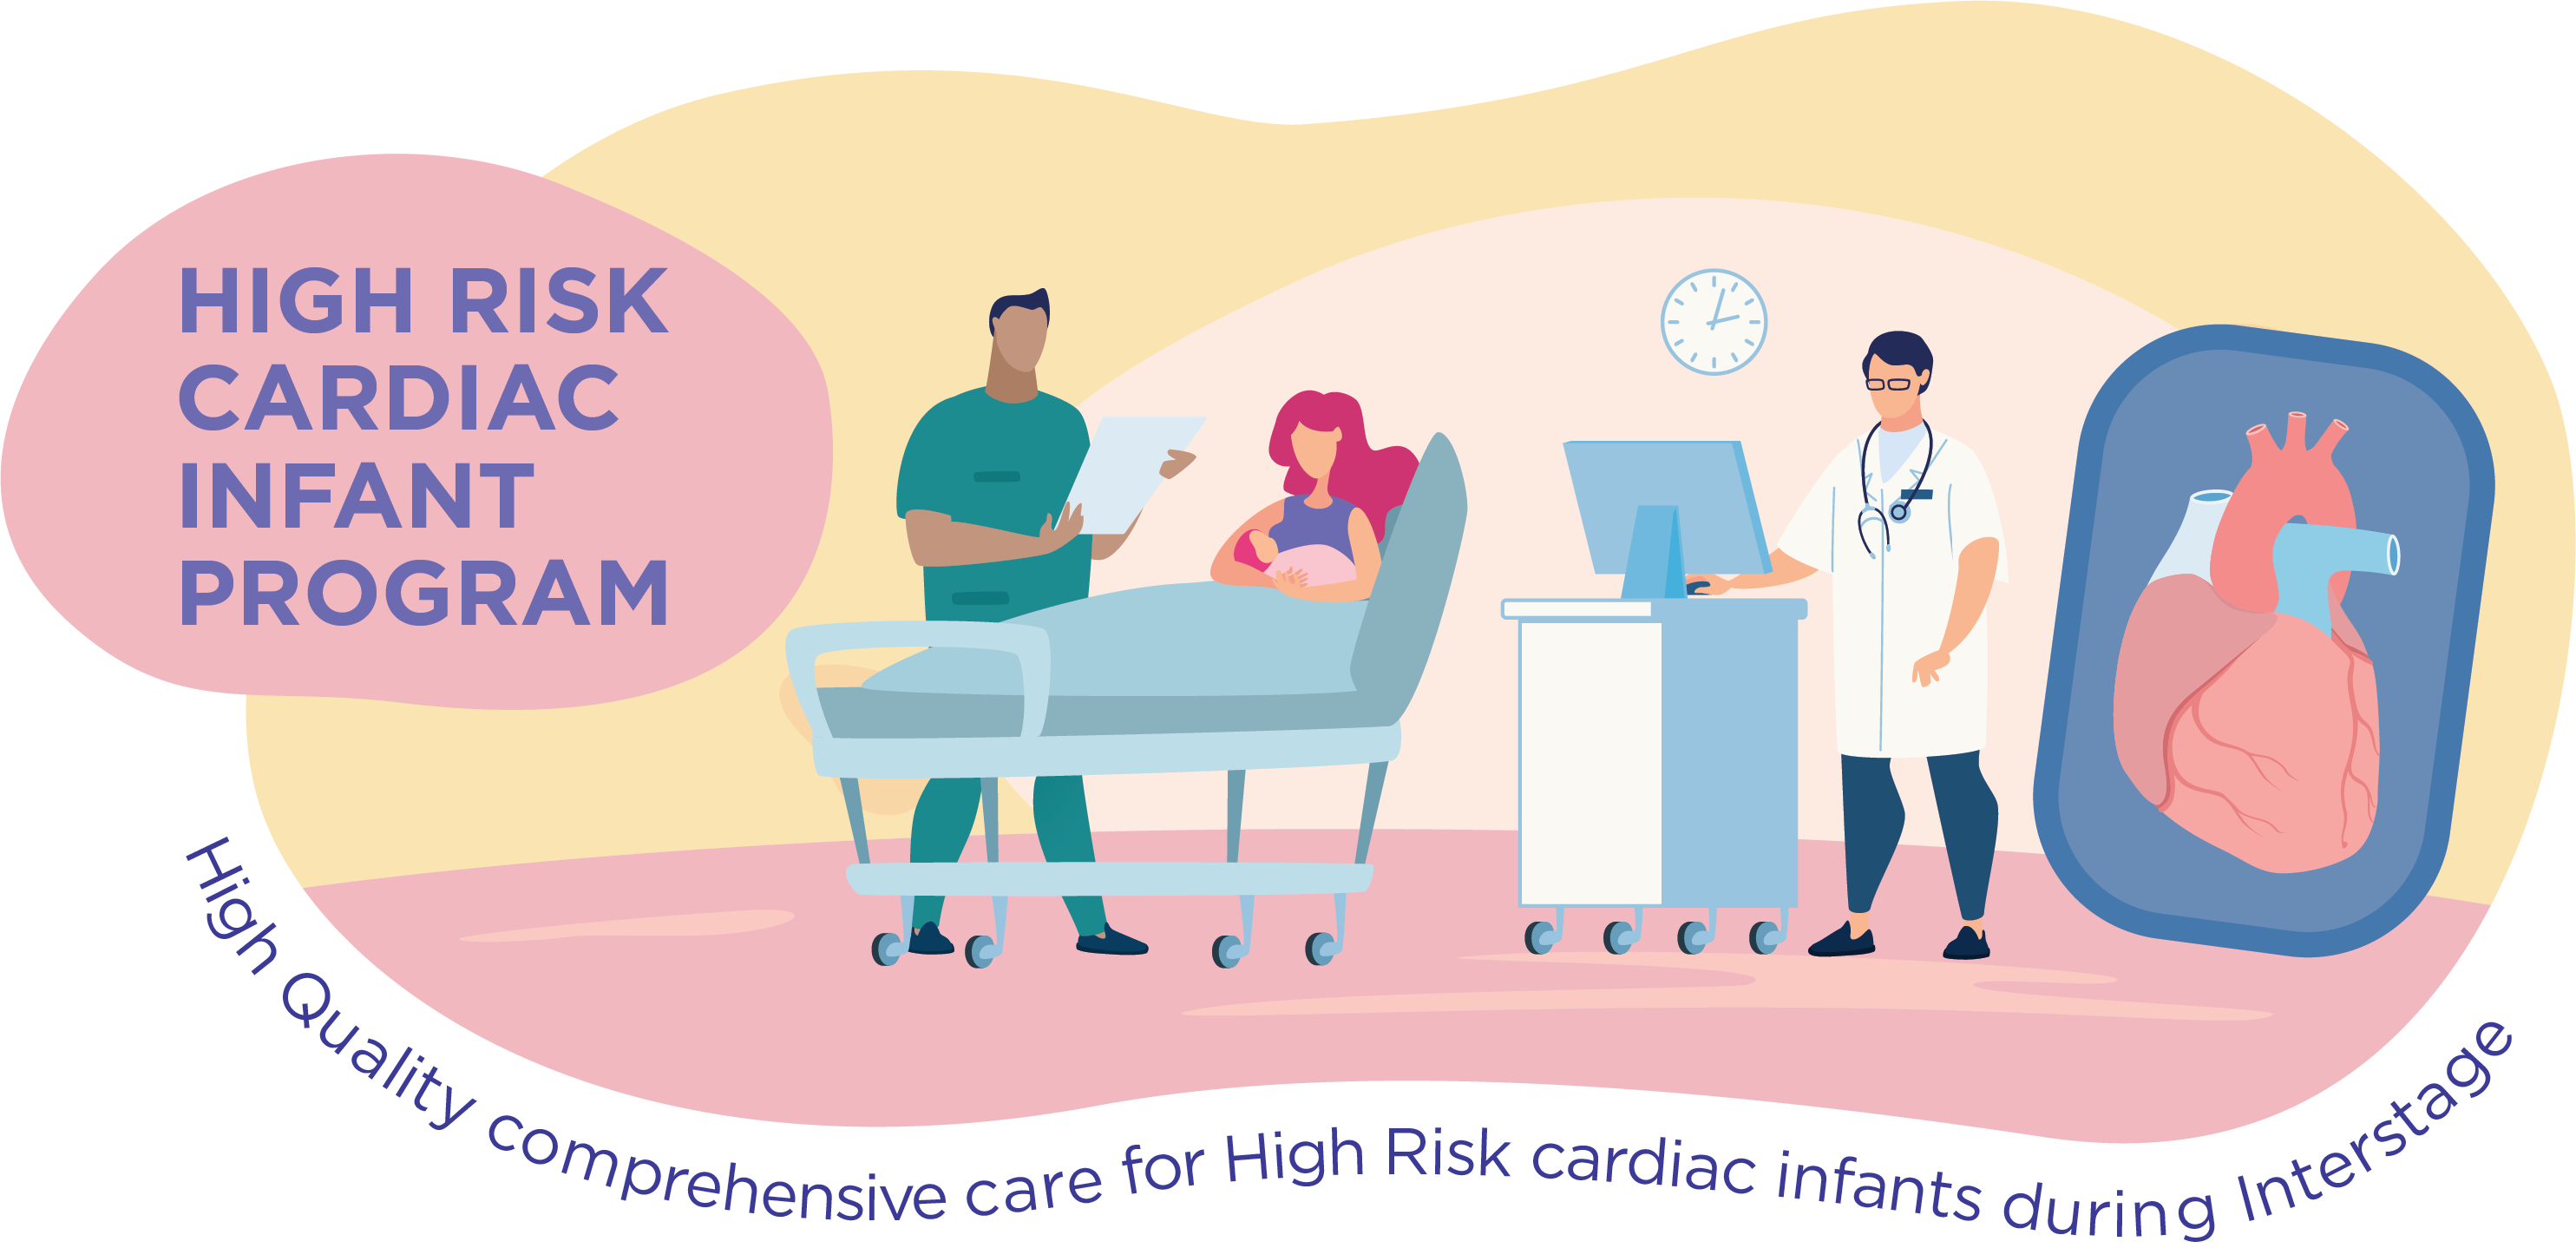 High Risk Cardiac Infant Program image